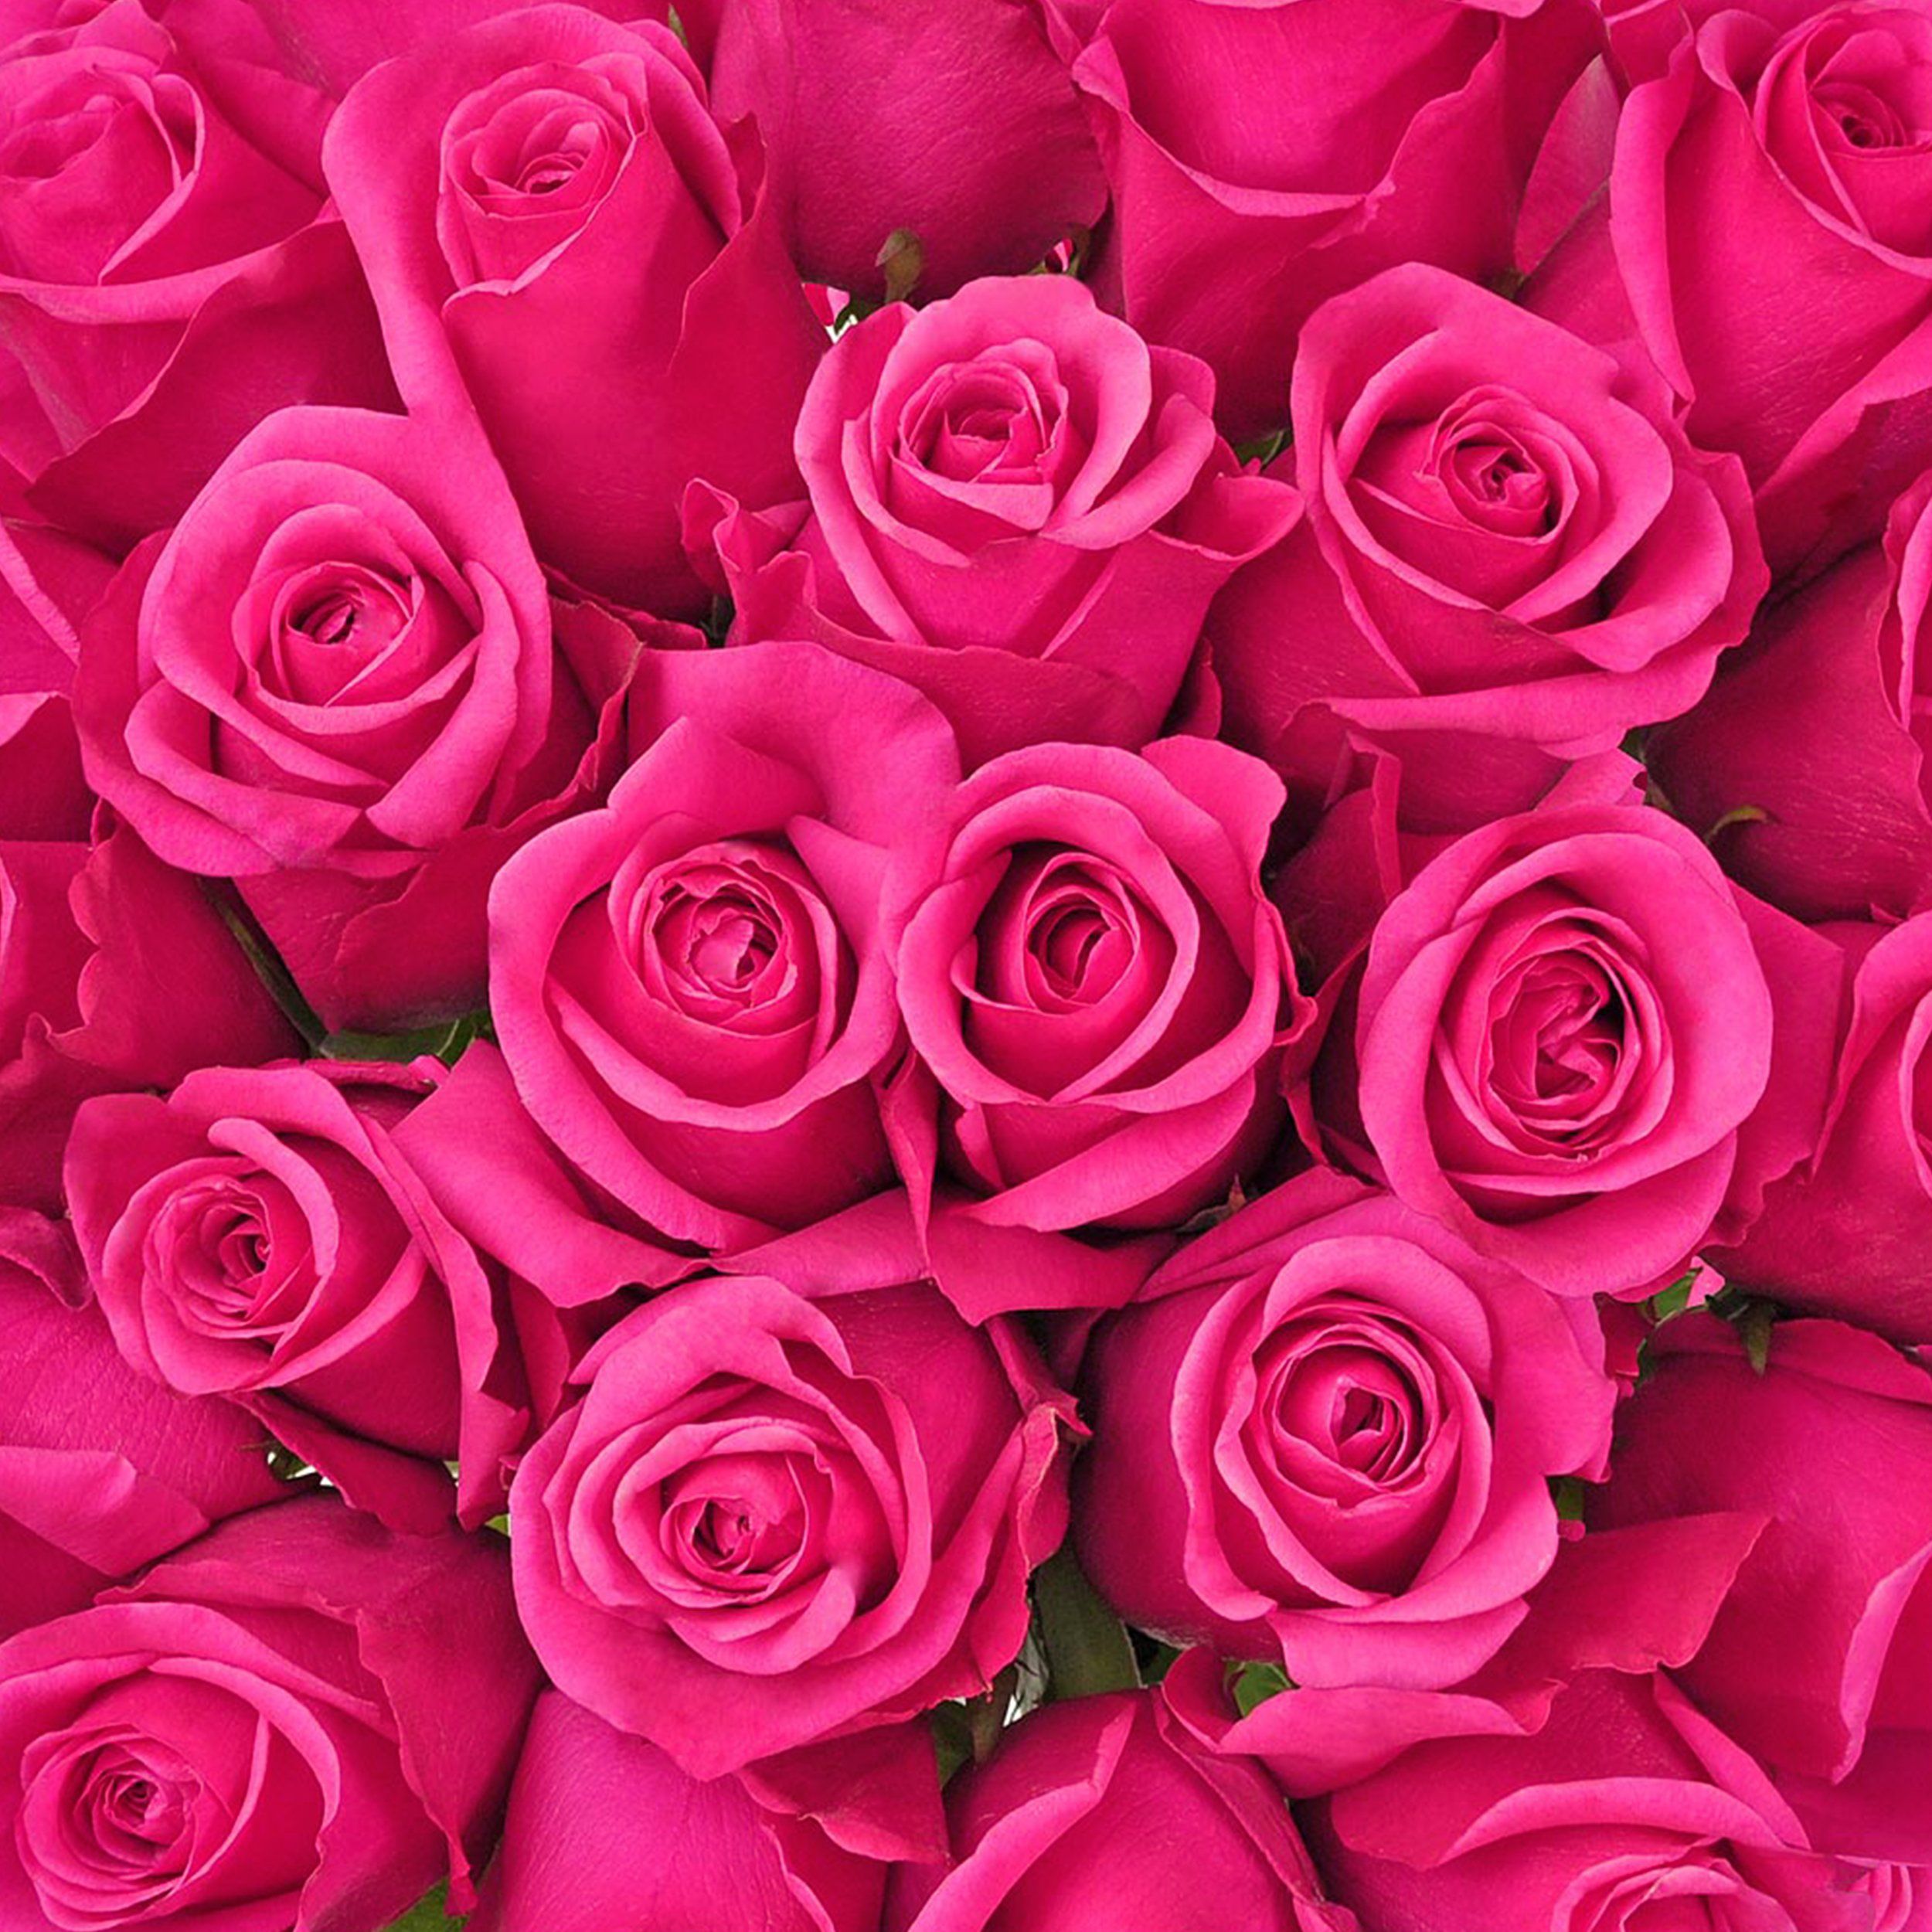 Hot Pink Roses. Pink roses background, Hot pink roses, Pink rose tattoos